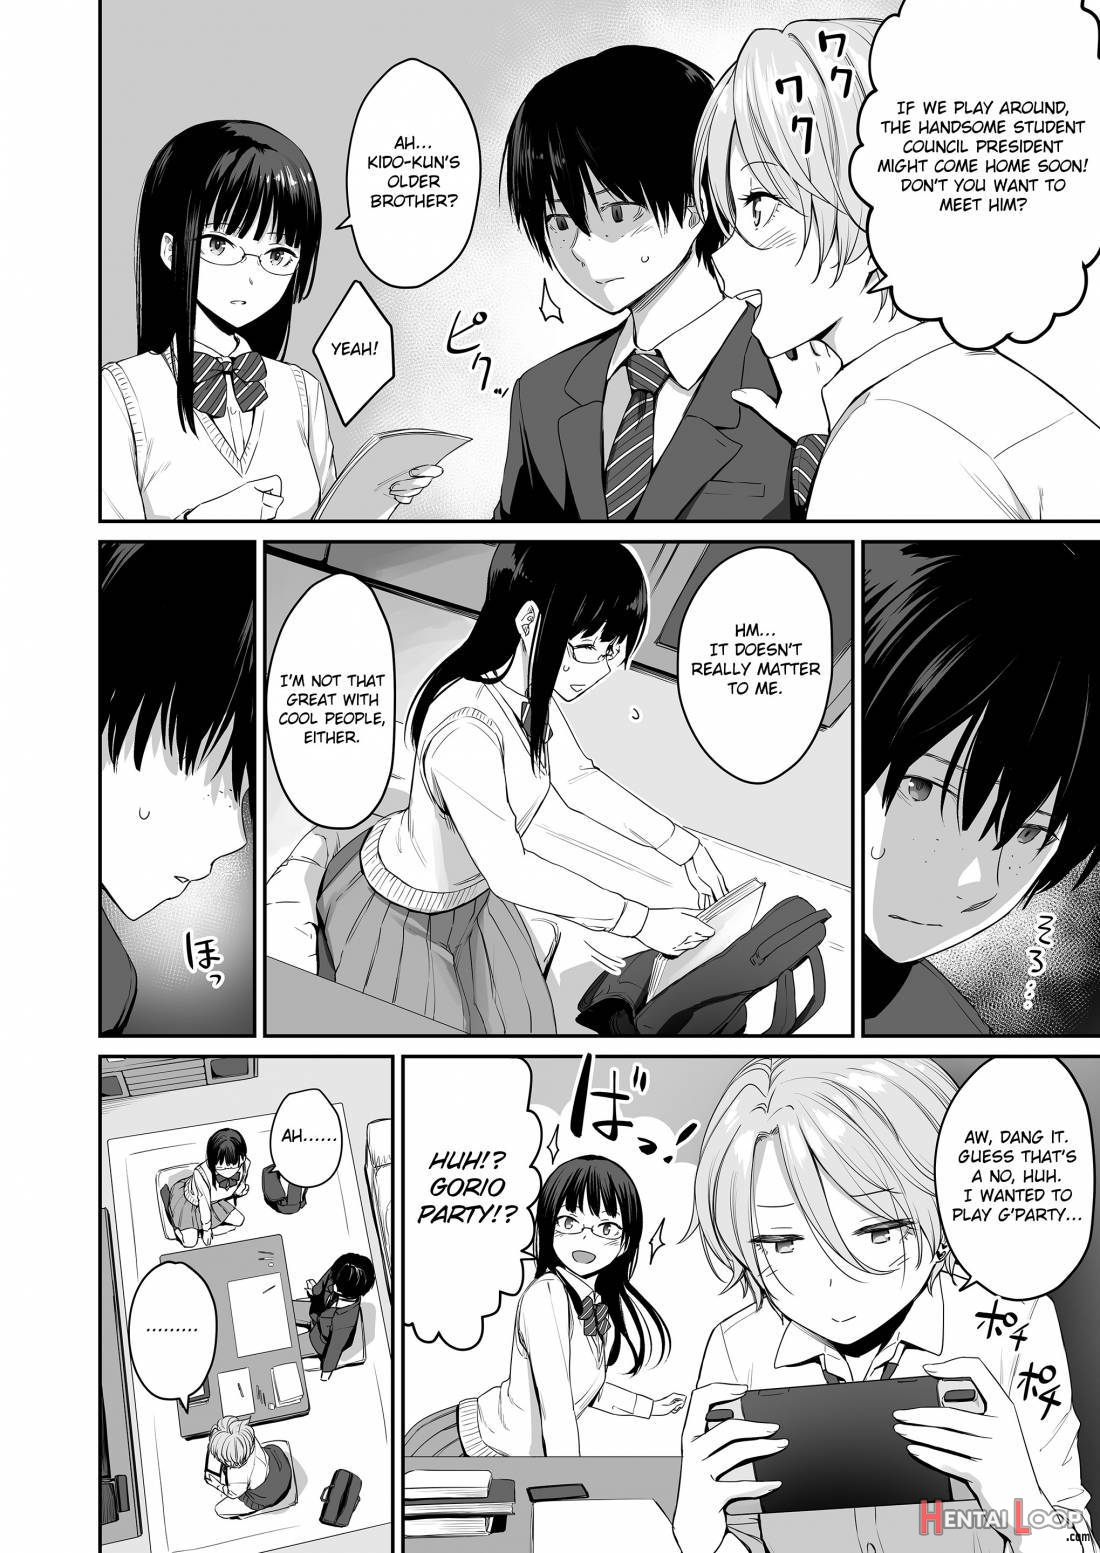 Page 4 of Boku Dake Ga Sex Dekinai Ie (by Benimura Karu) - Hentai doujinshi  for free at HentaiLoop